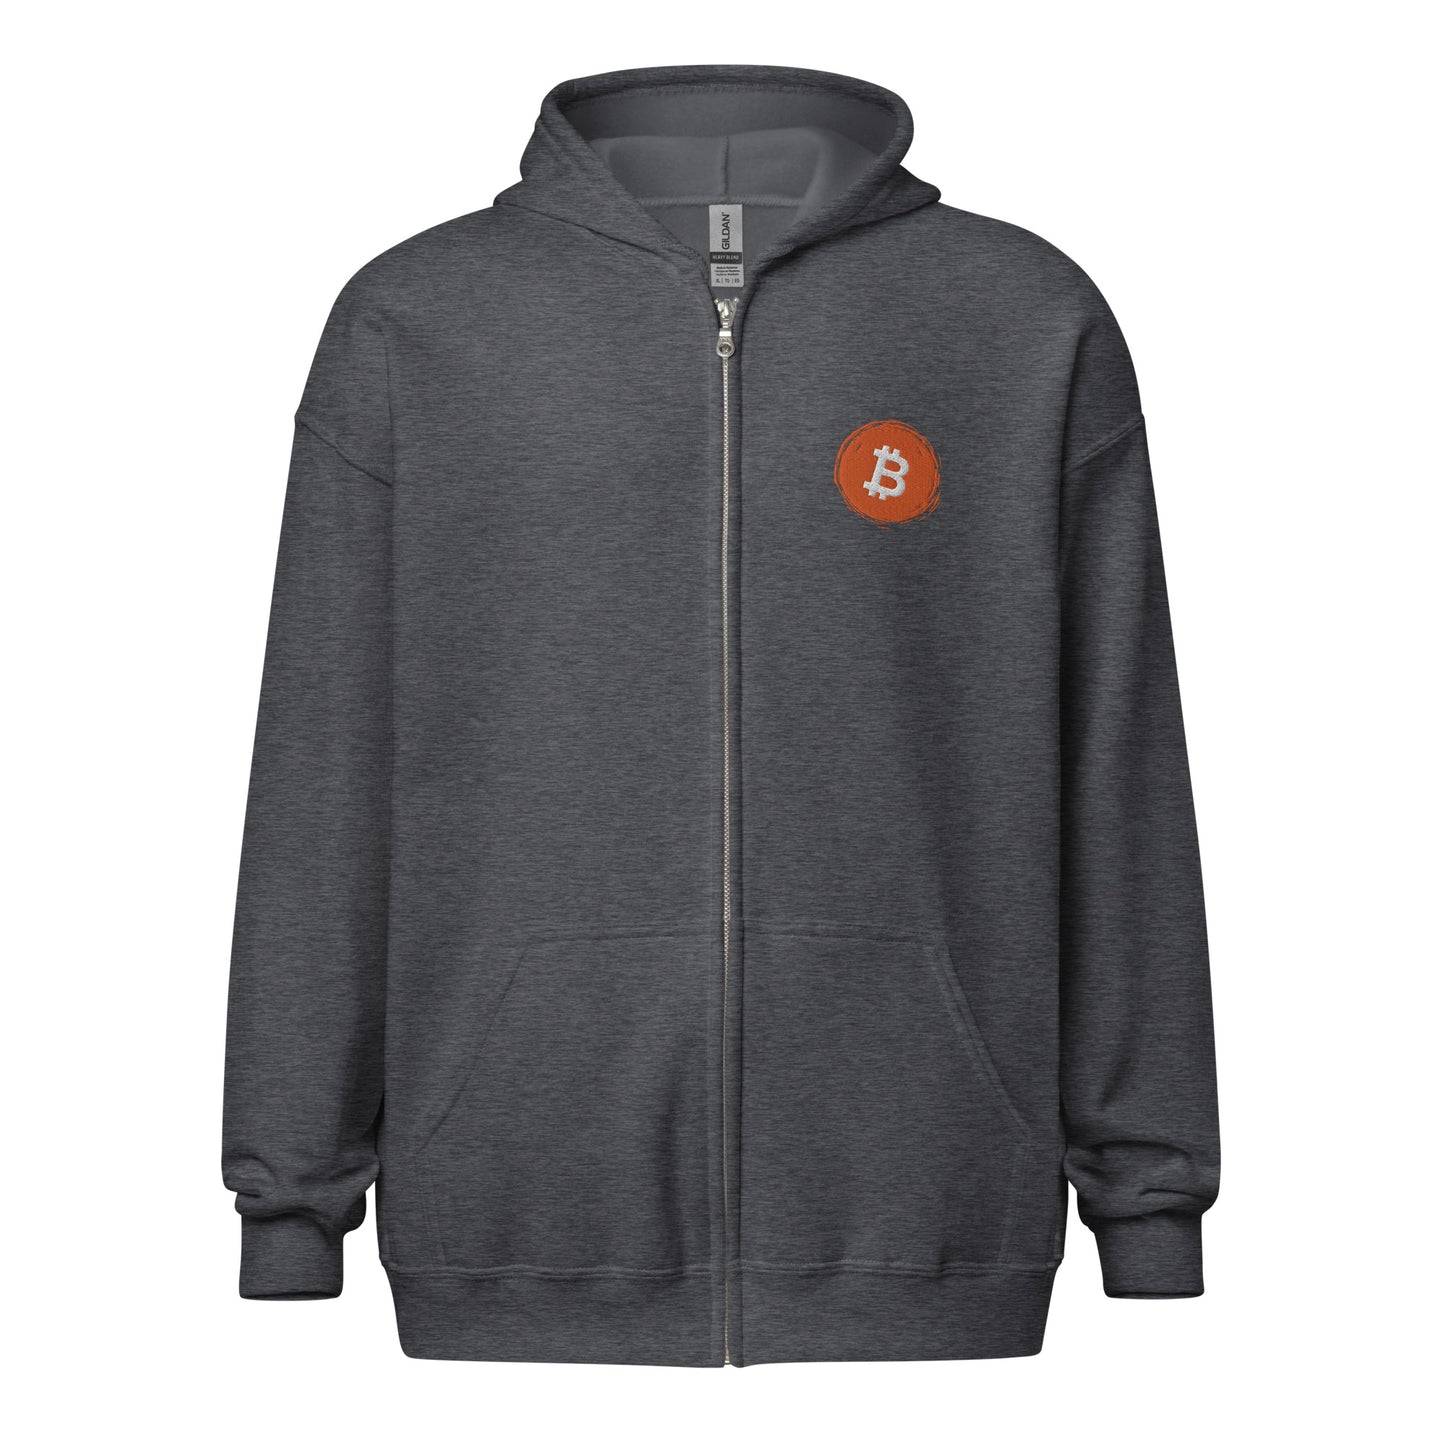 Bitcoin Make War Unaffordable Unisex heavy blend zip hoodie